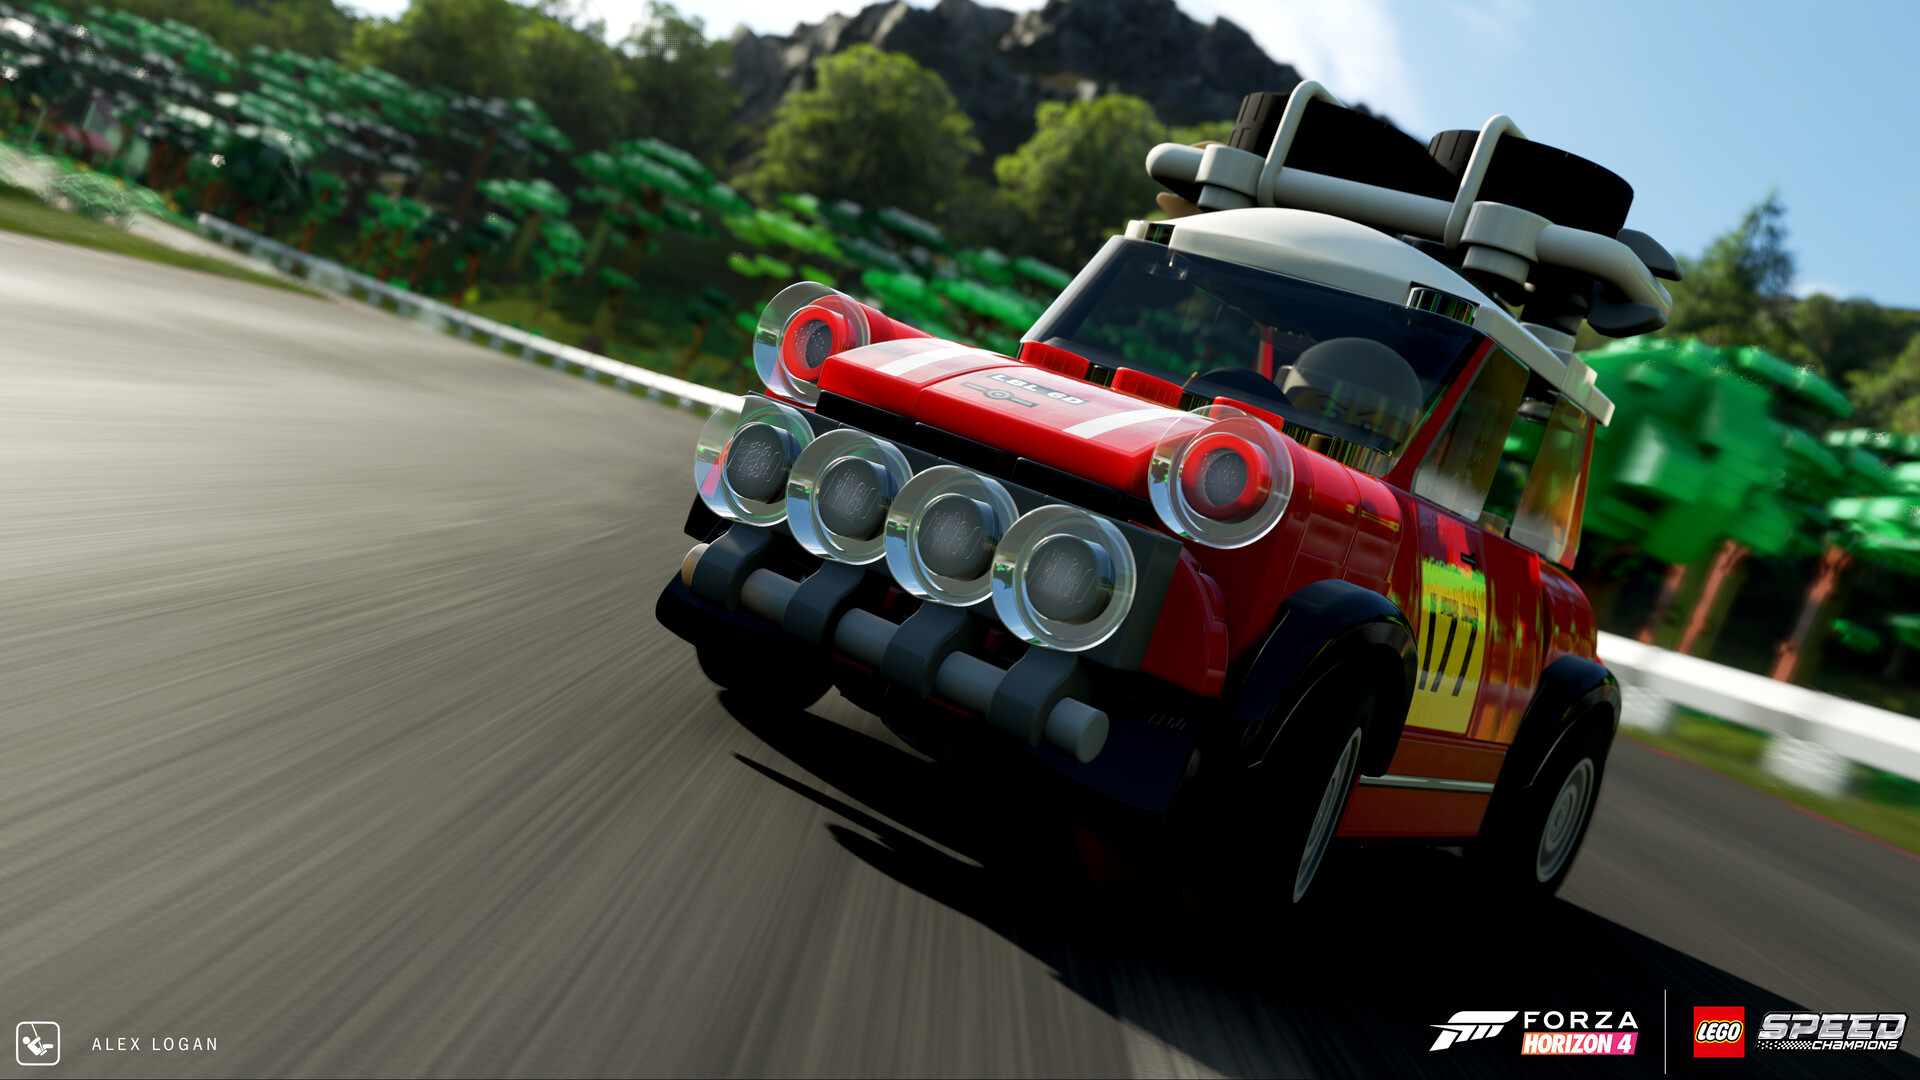 Alex Logan - Forza Horizon 4 - Lego Speed Champions DLC